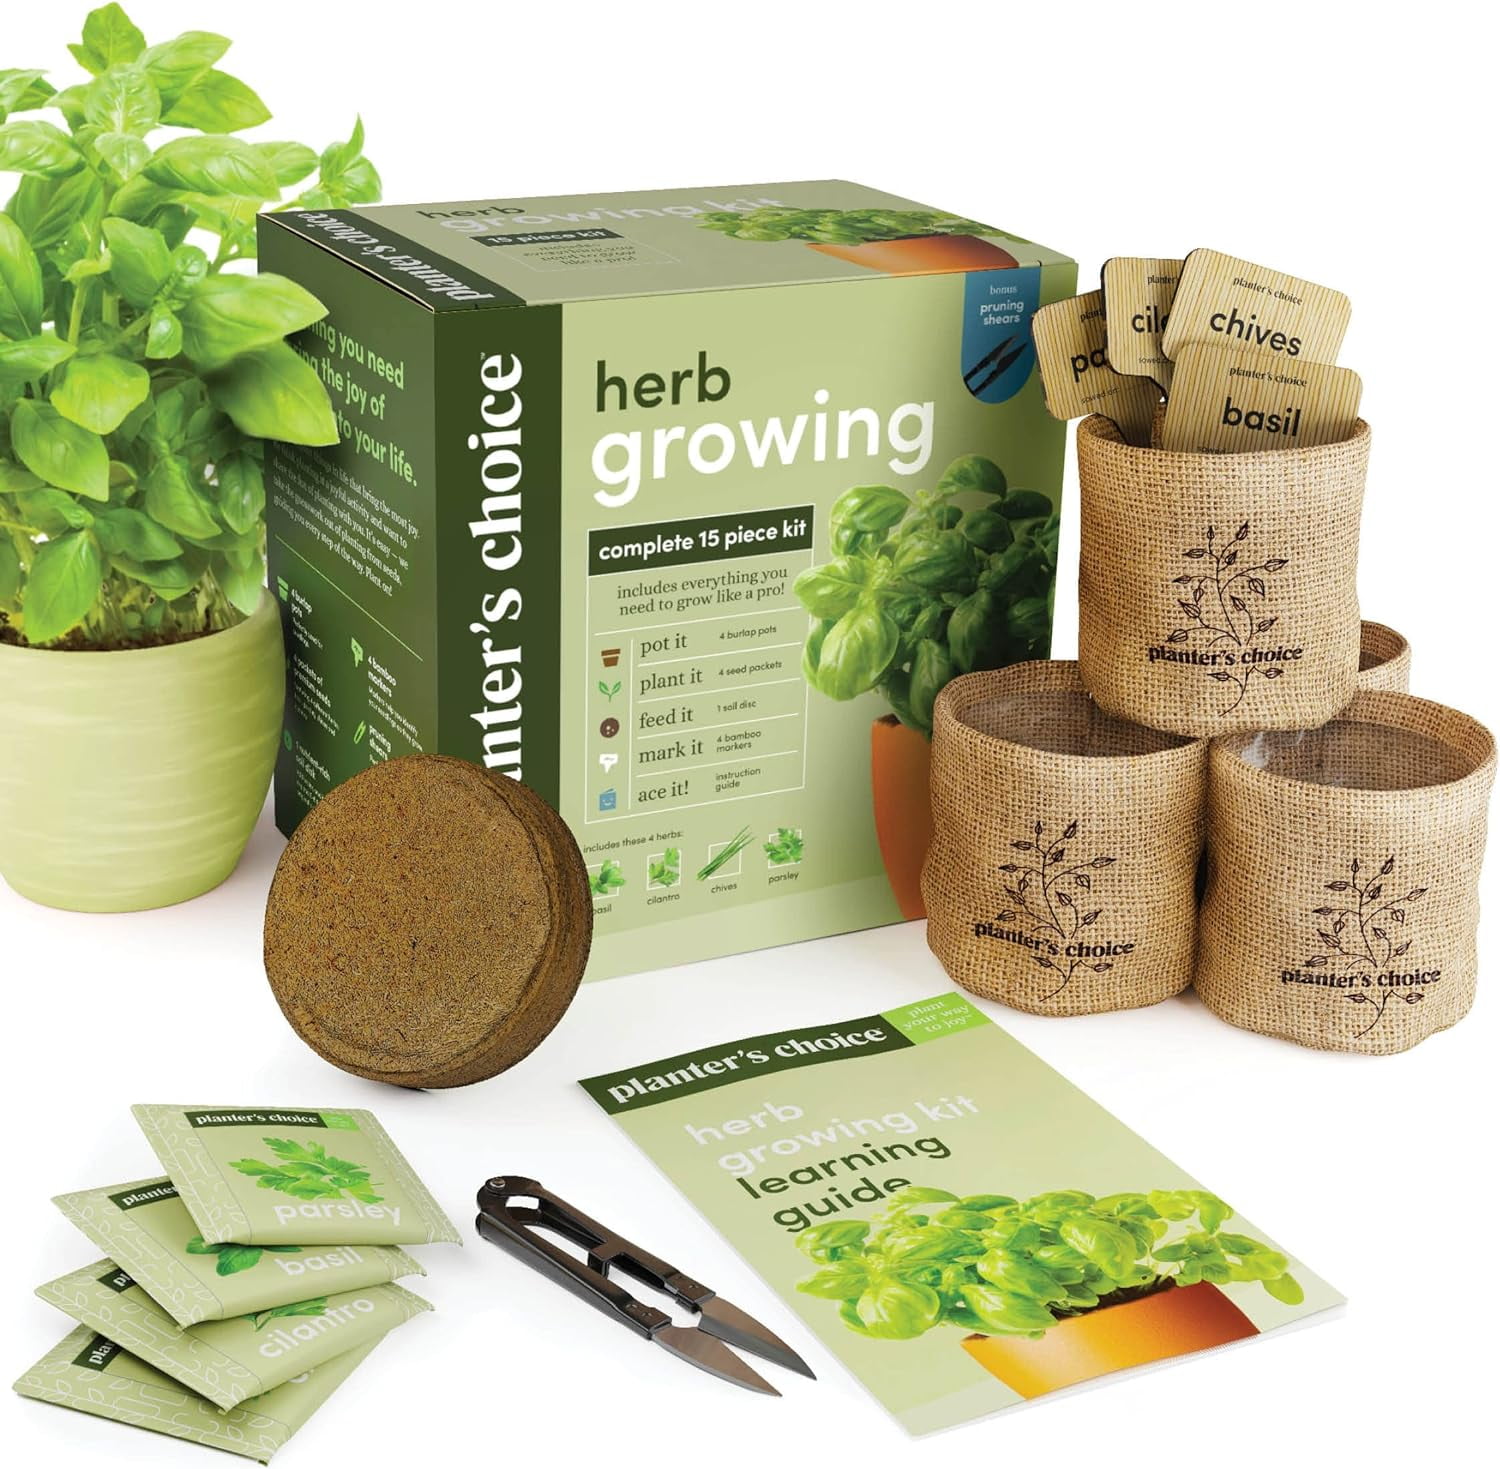 Silogro Home Grower - Buy Premium Herb Growing Kit